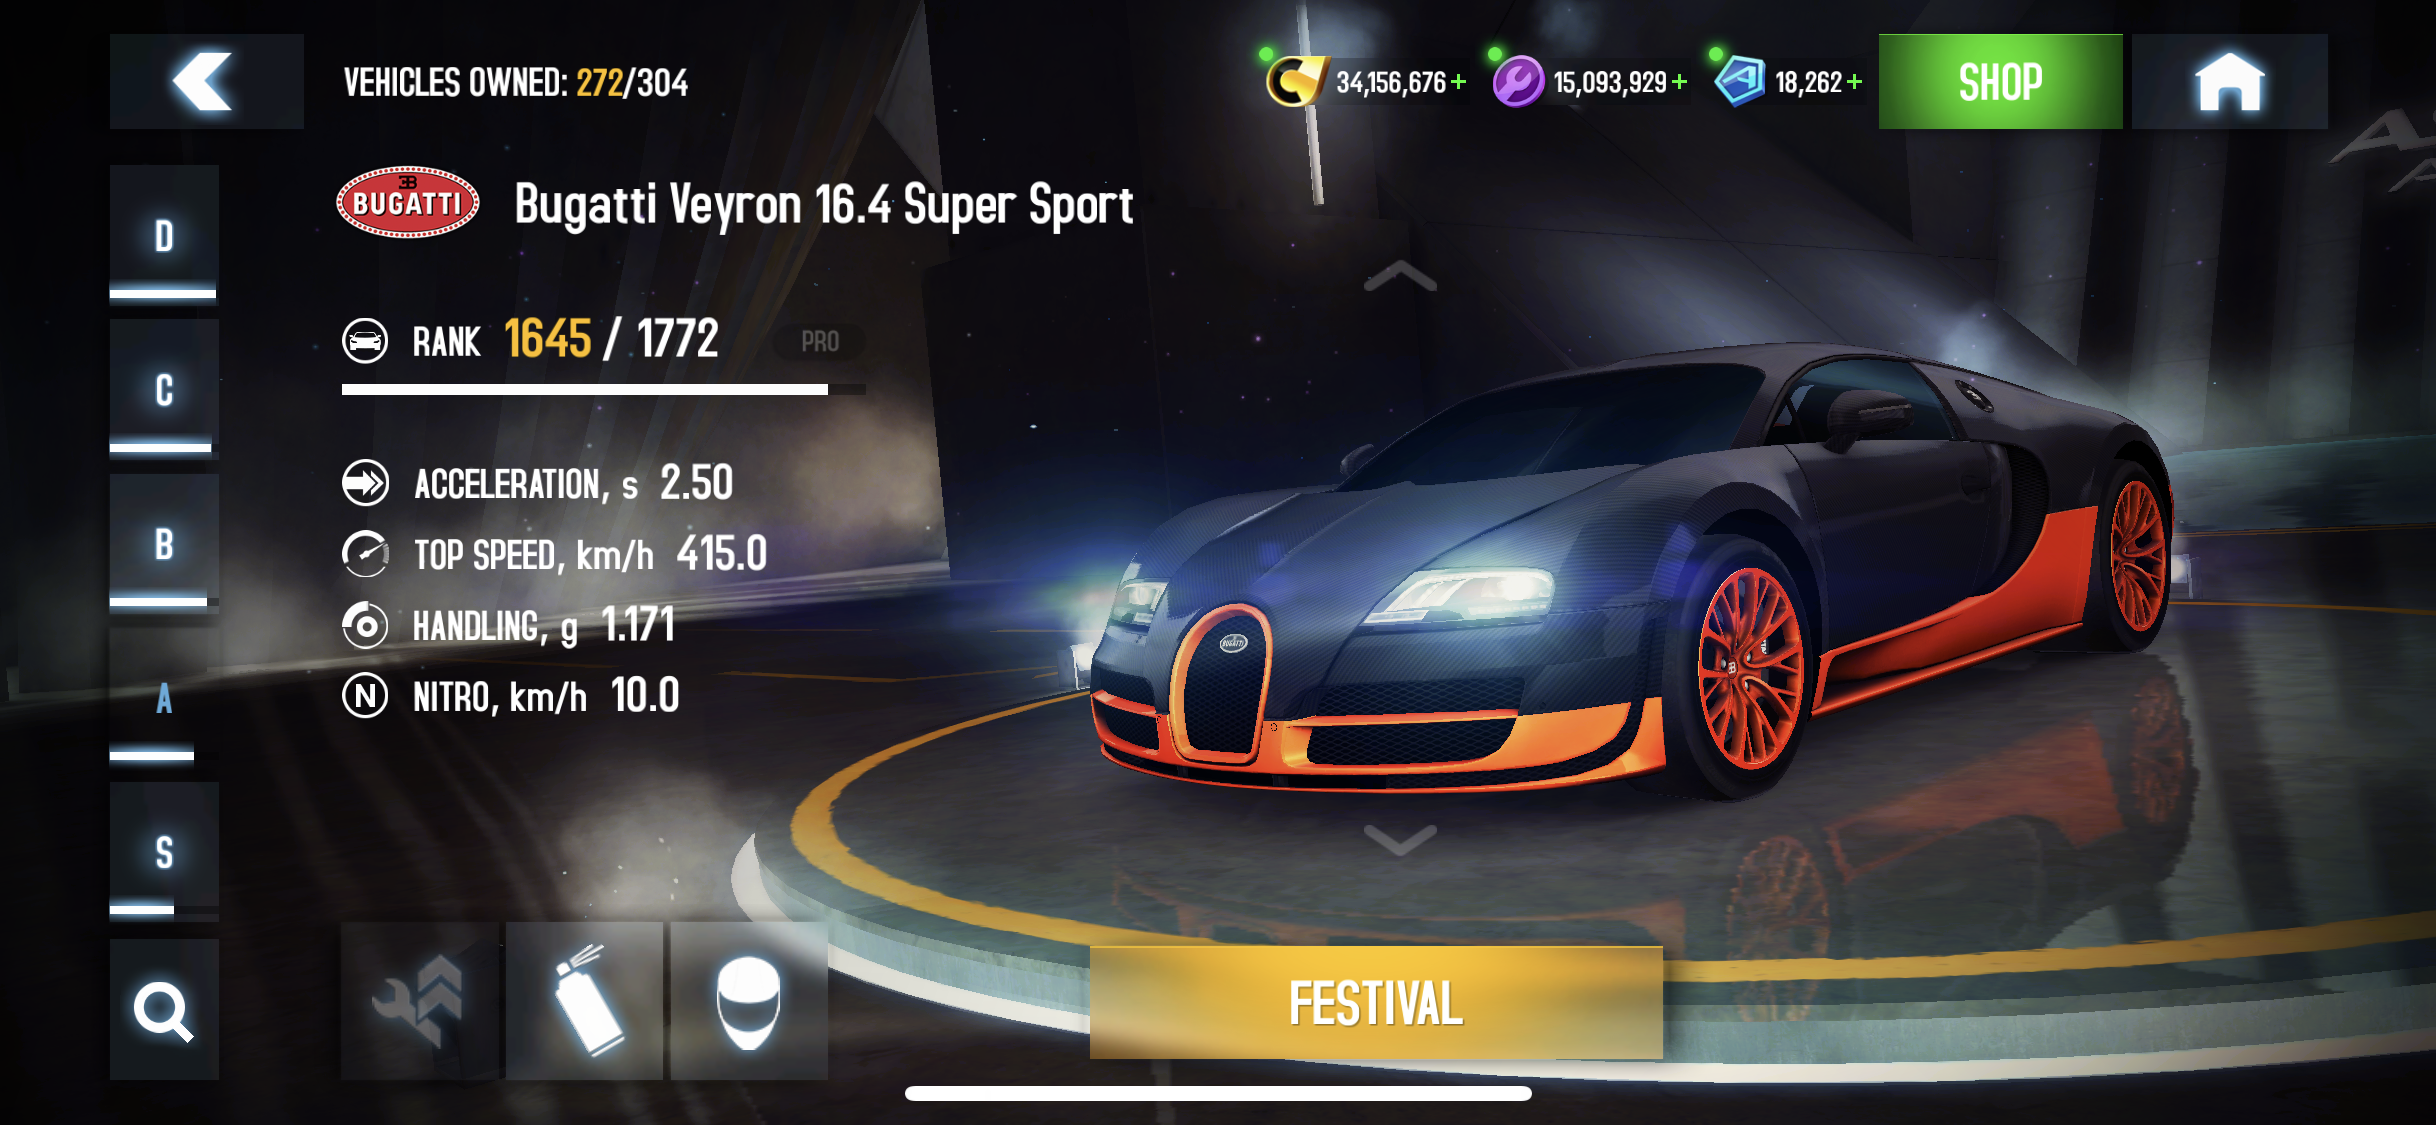 2022 bugatti veyron grand sport vitesse special edition